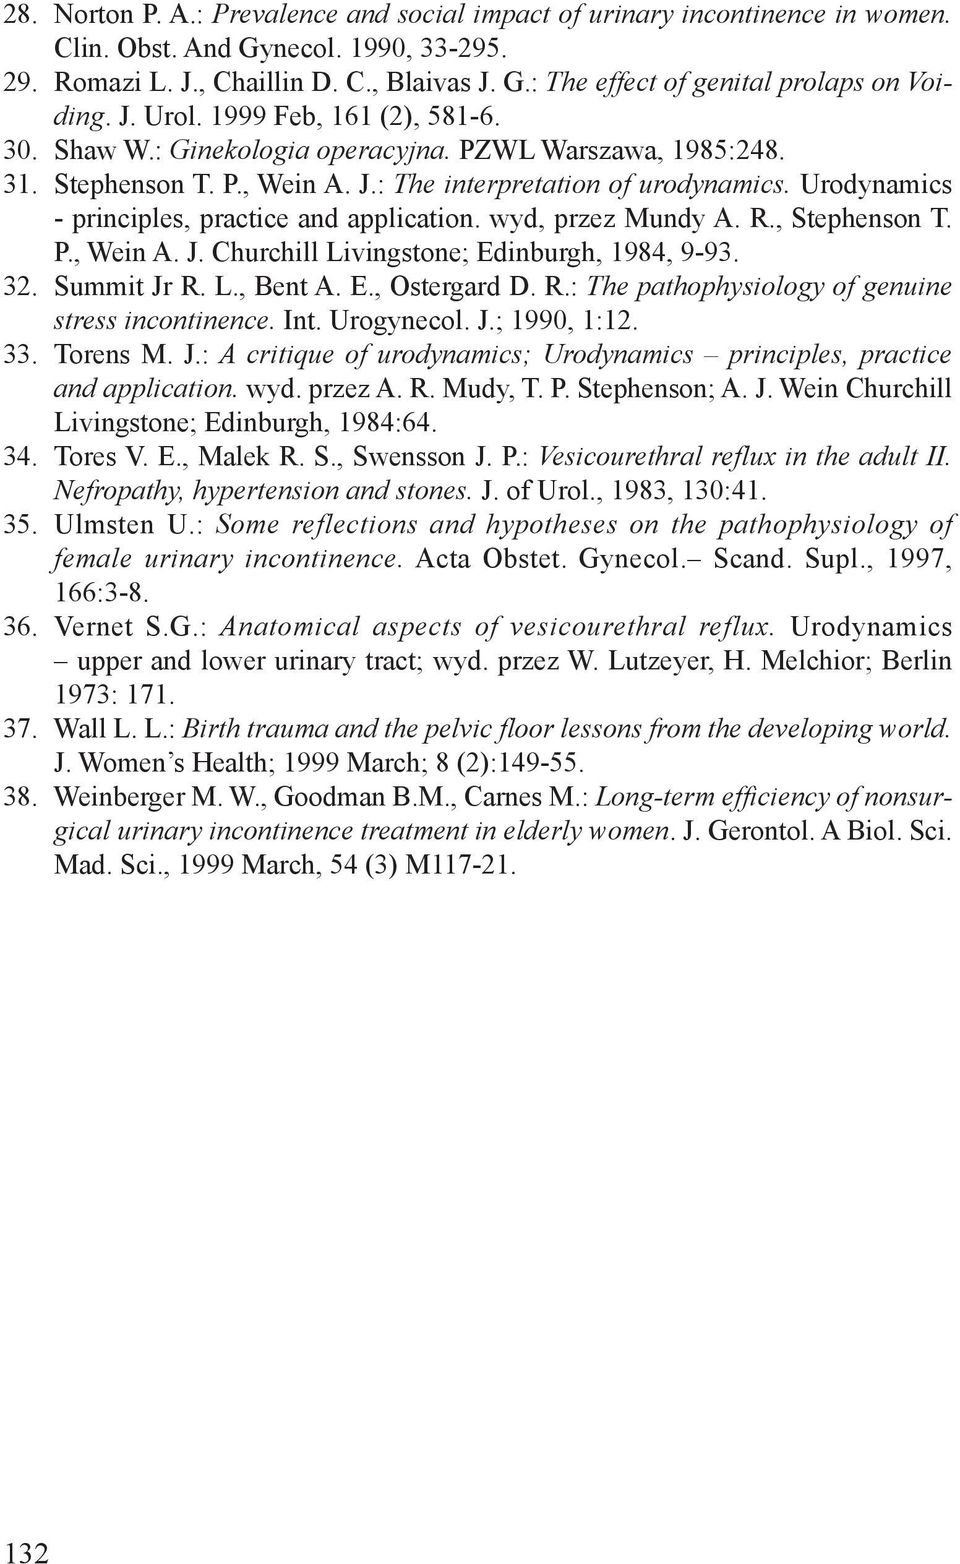 Urodynamics - principles, practice and application. wyd, przez Mundy A. R., Stephenson T. P., Wein A. J. Churchill Livingstone; Edinburgh, 1984, 9-93. Summit Jr R. L., Bent A. E., Ostergard D. R.: The pathophysiology of genuine stress incontinence.